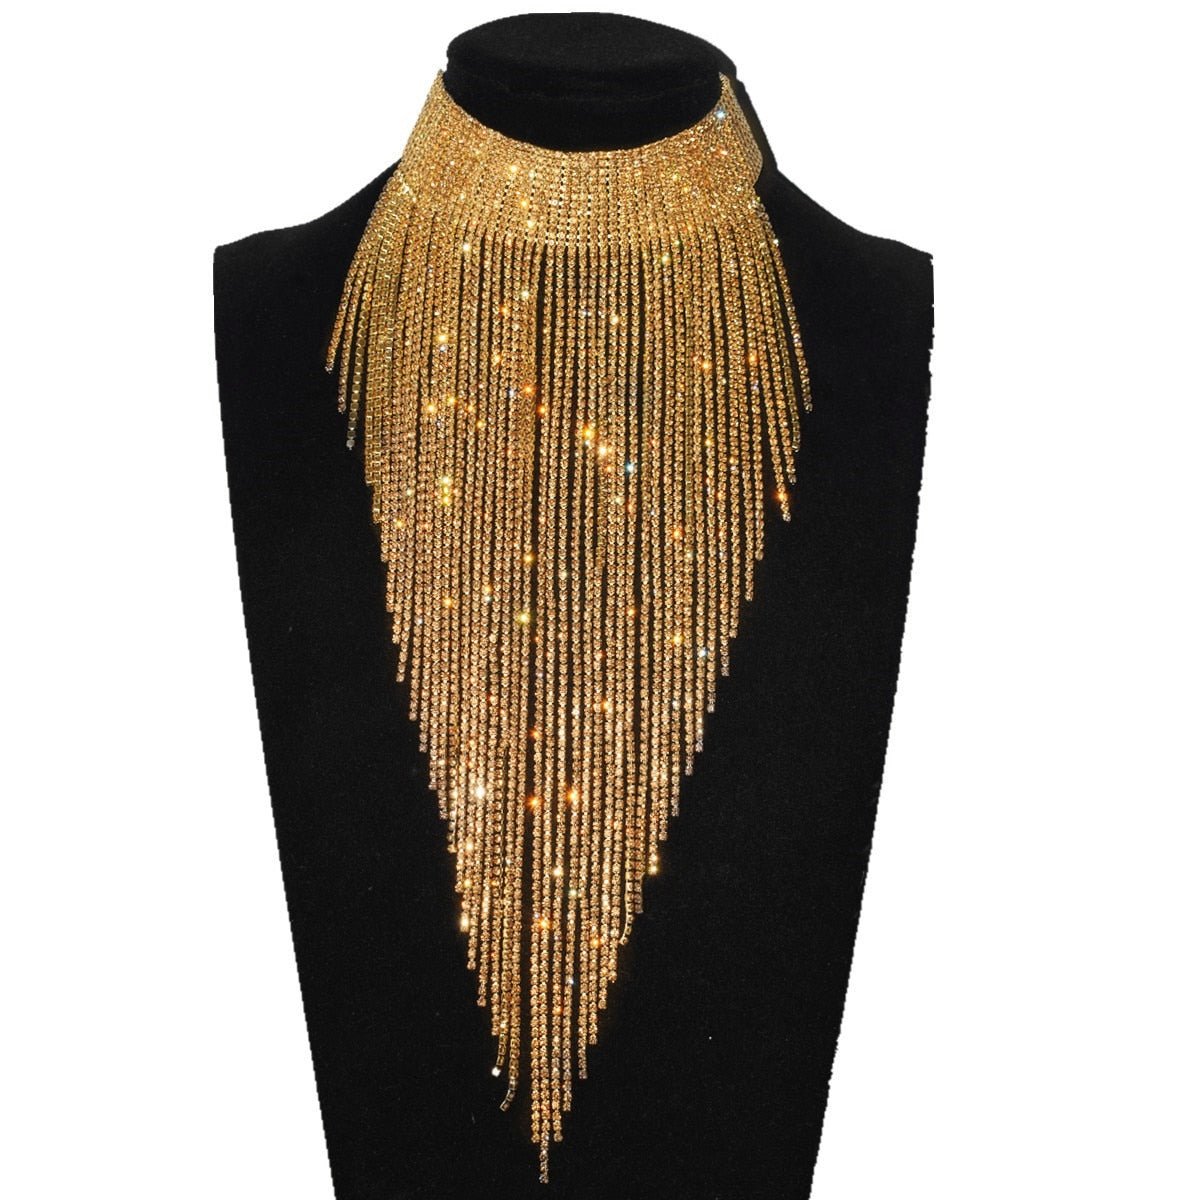 Josephine- the Burlesque Glam Rhinestone Chain Collar Necklace 8 Styles